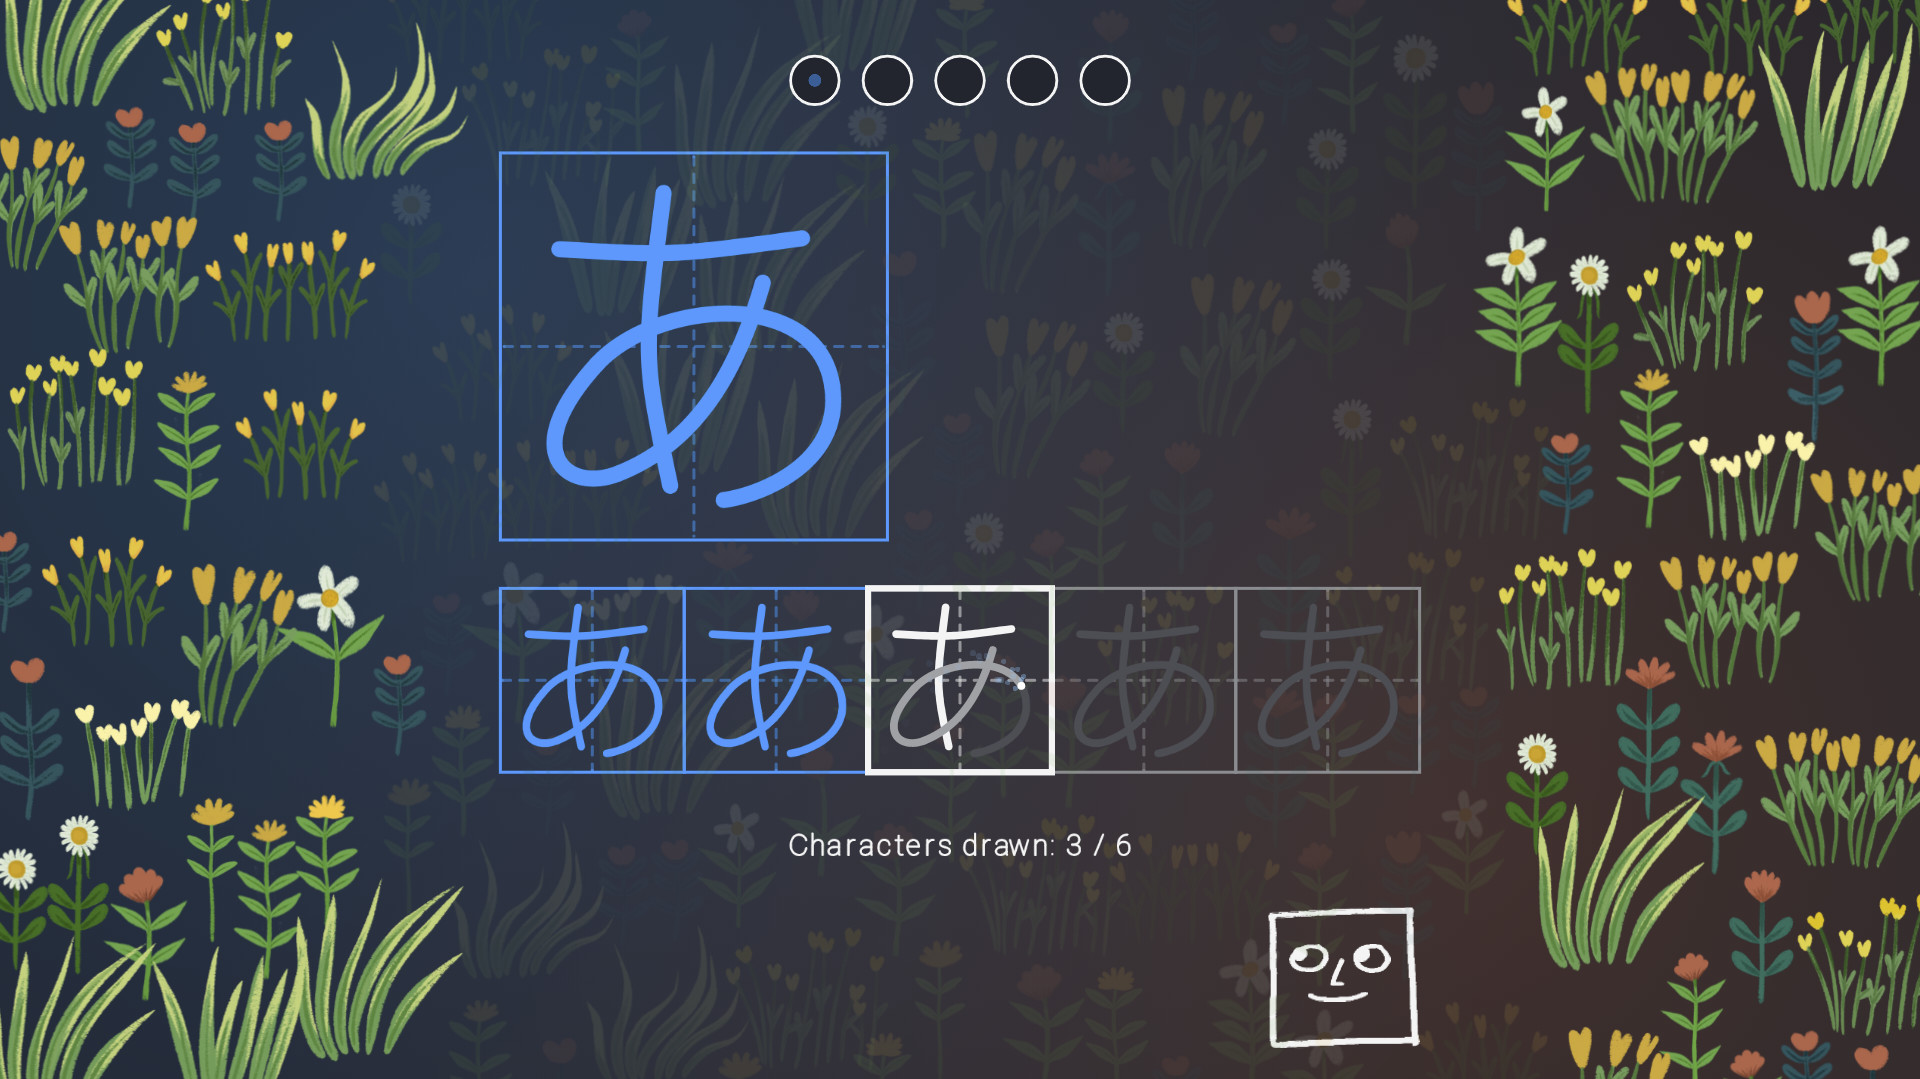 You Can Kana - Learn Japanese Hiragana & Katakana EN Language Only Steam CD Key